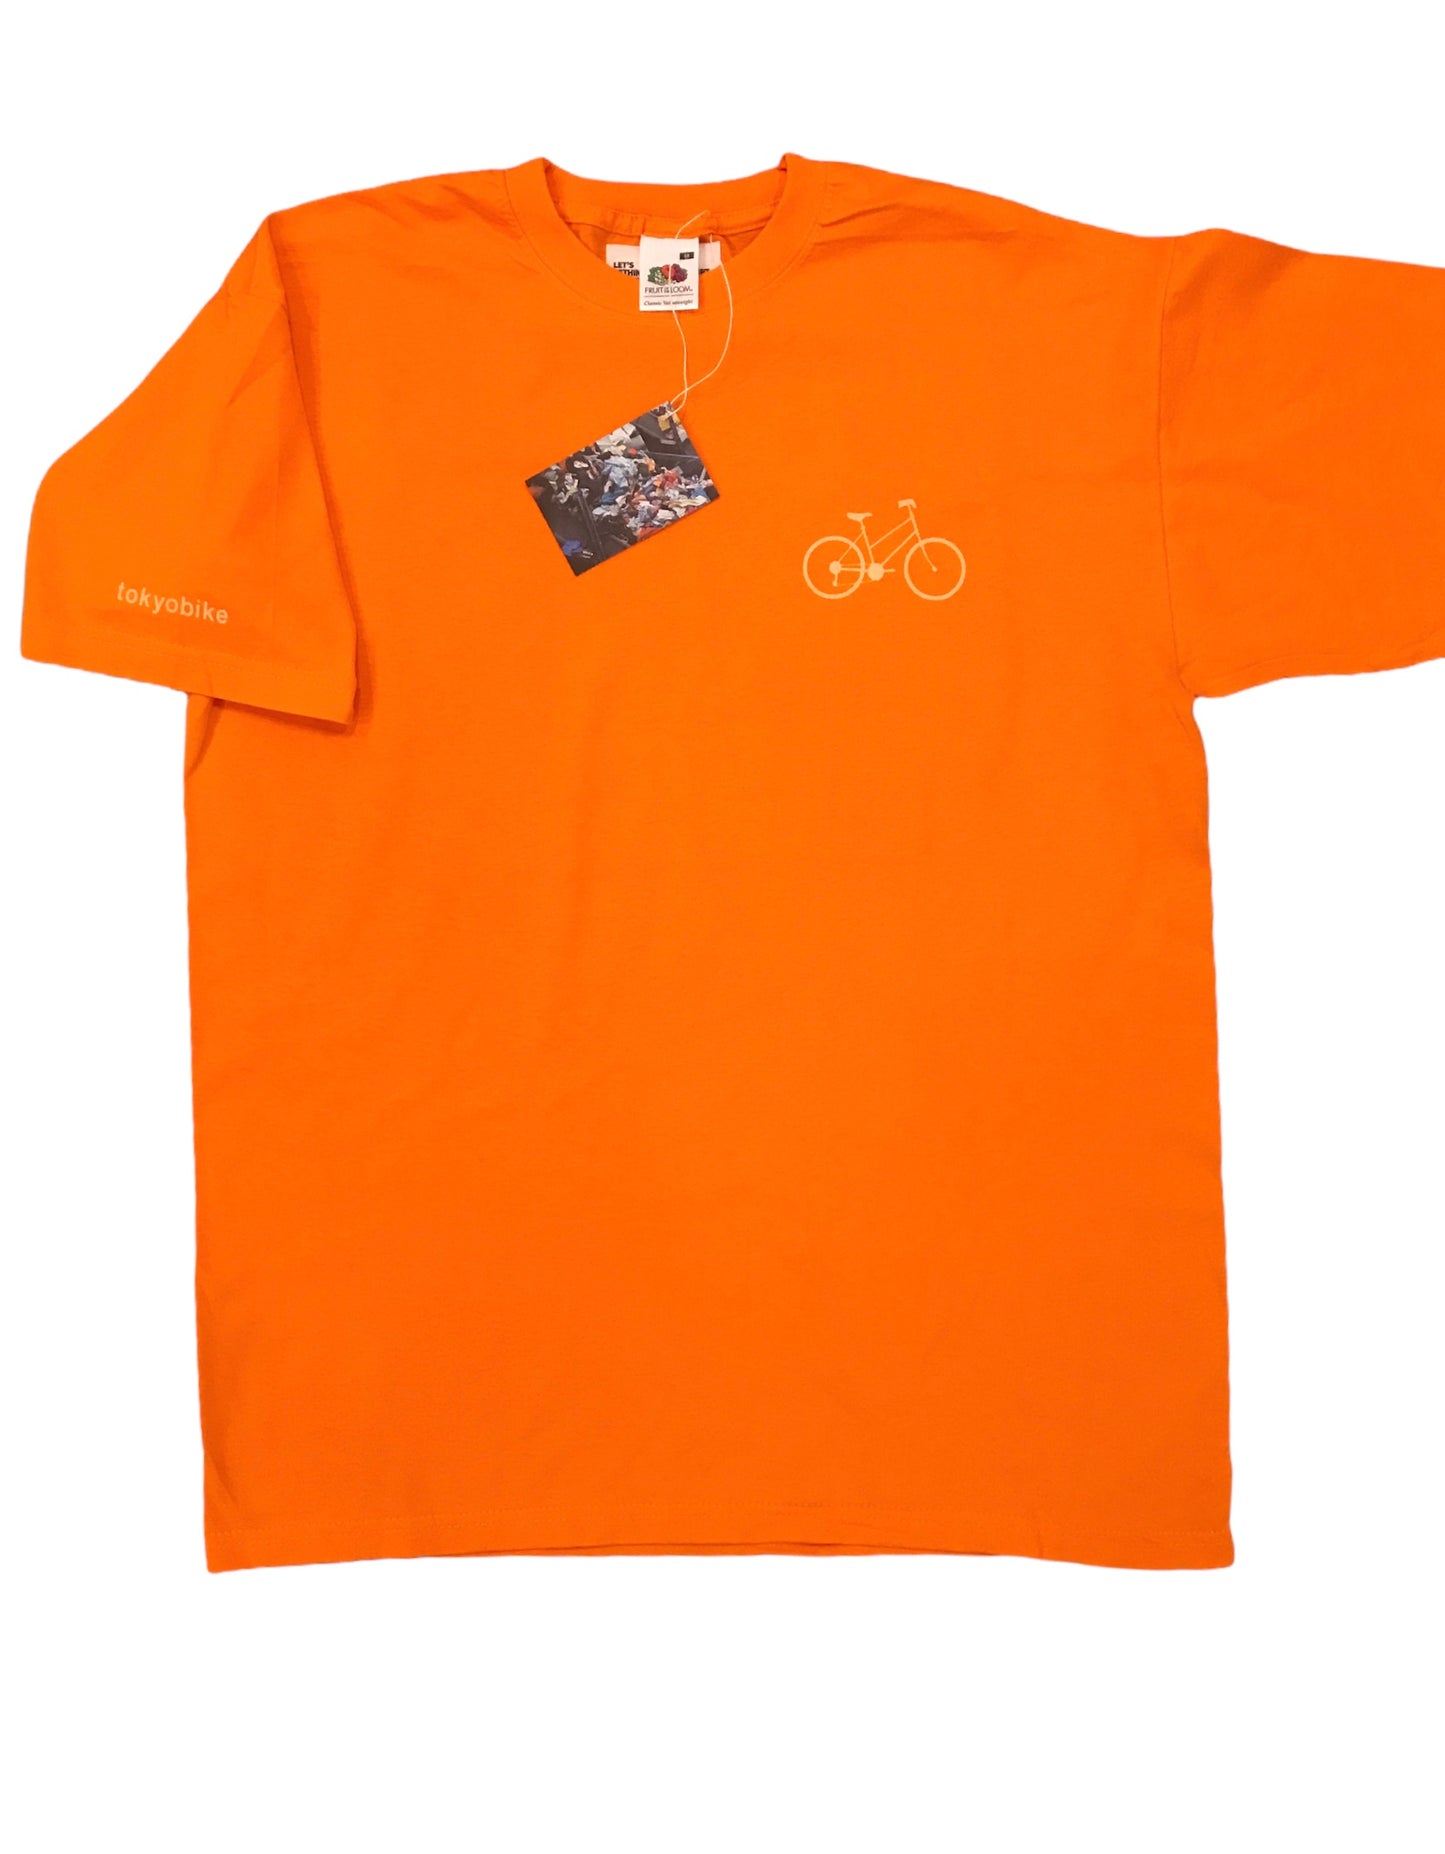 tokyobike Shirt (S)